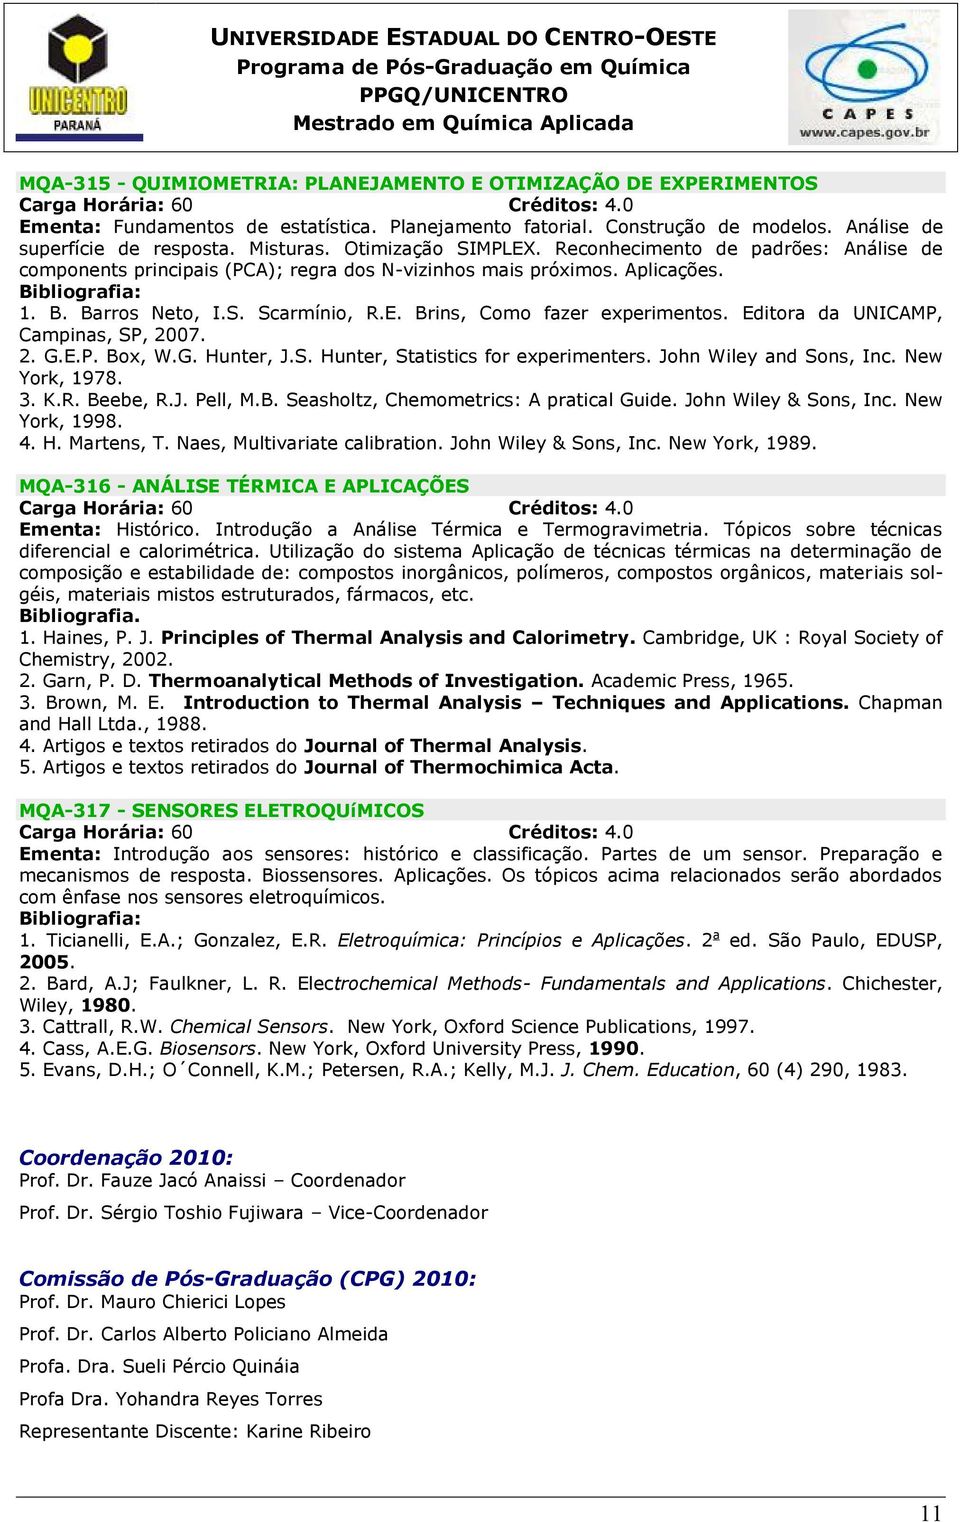 Editora da UNICAMP, Campinas, SP, 2007. 2. G.E.P. Box, W.G. Hunter, J.S. Hunter, Statistics for experimenters. John Wiley and Sons, Inc. New York, 1978. 3. K.R. Beebe, R.J. Pell, M.B. Seasholtz, Chemometrics: A pratical Guide.